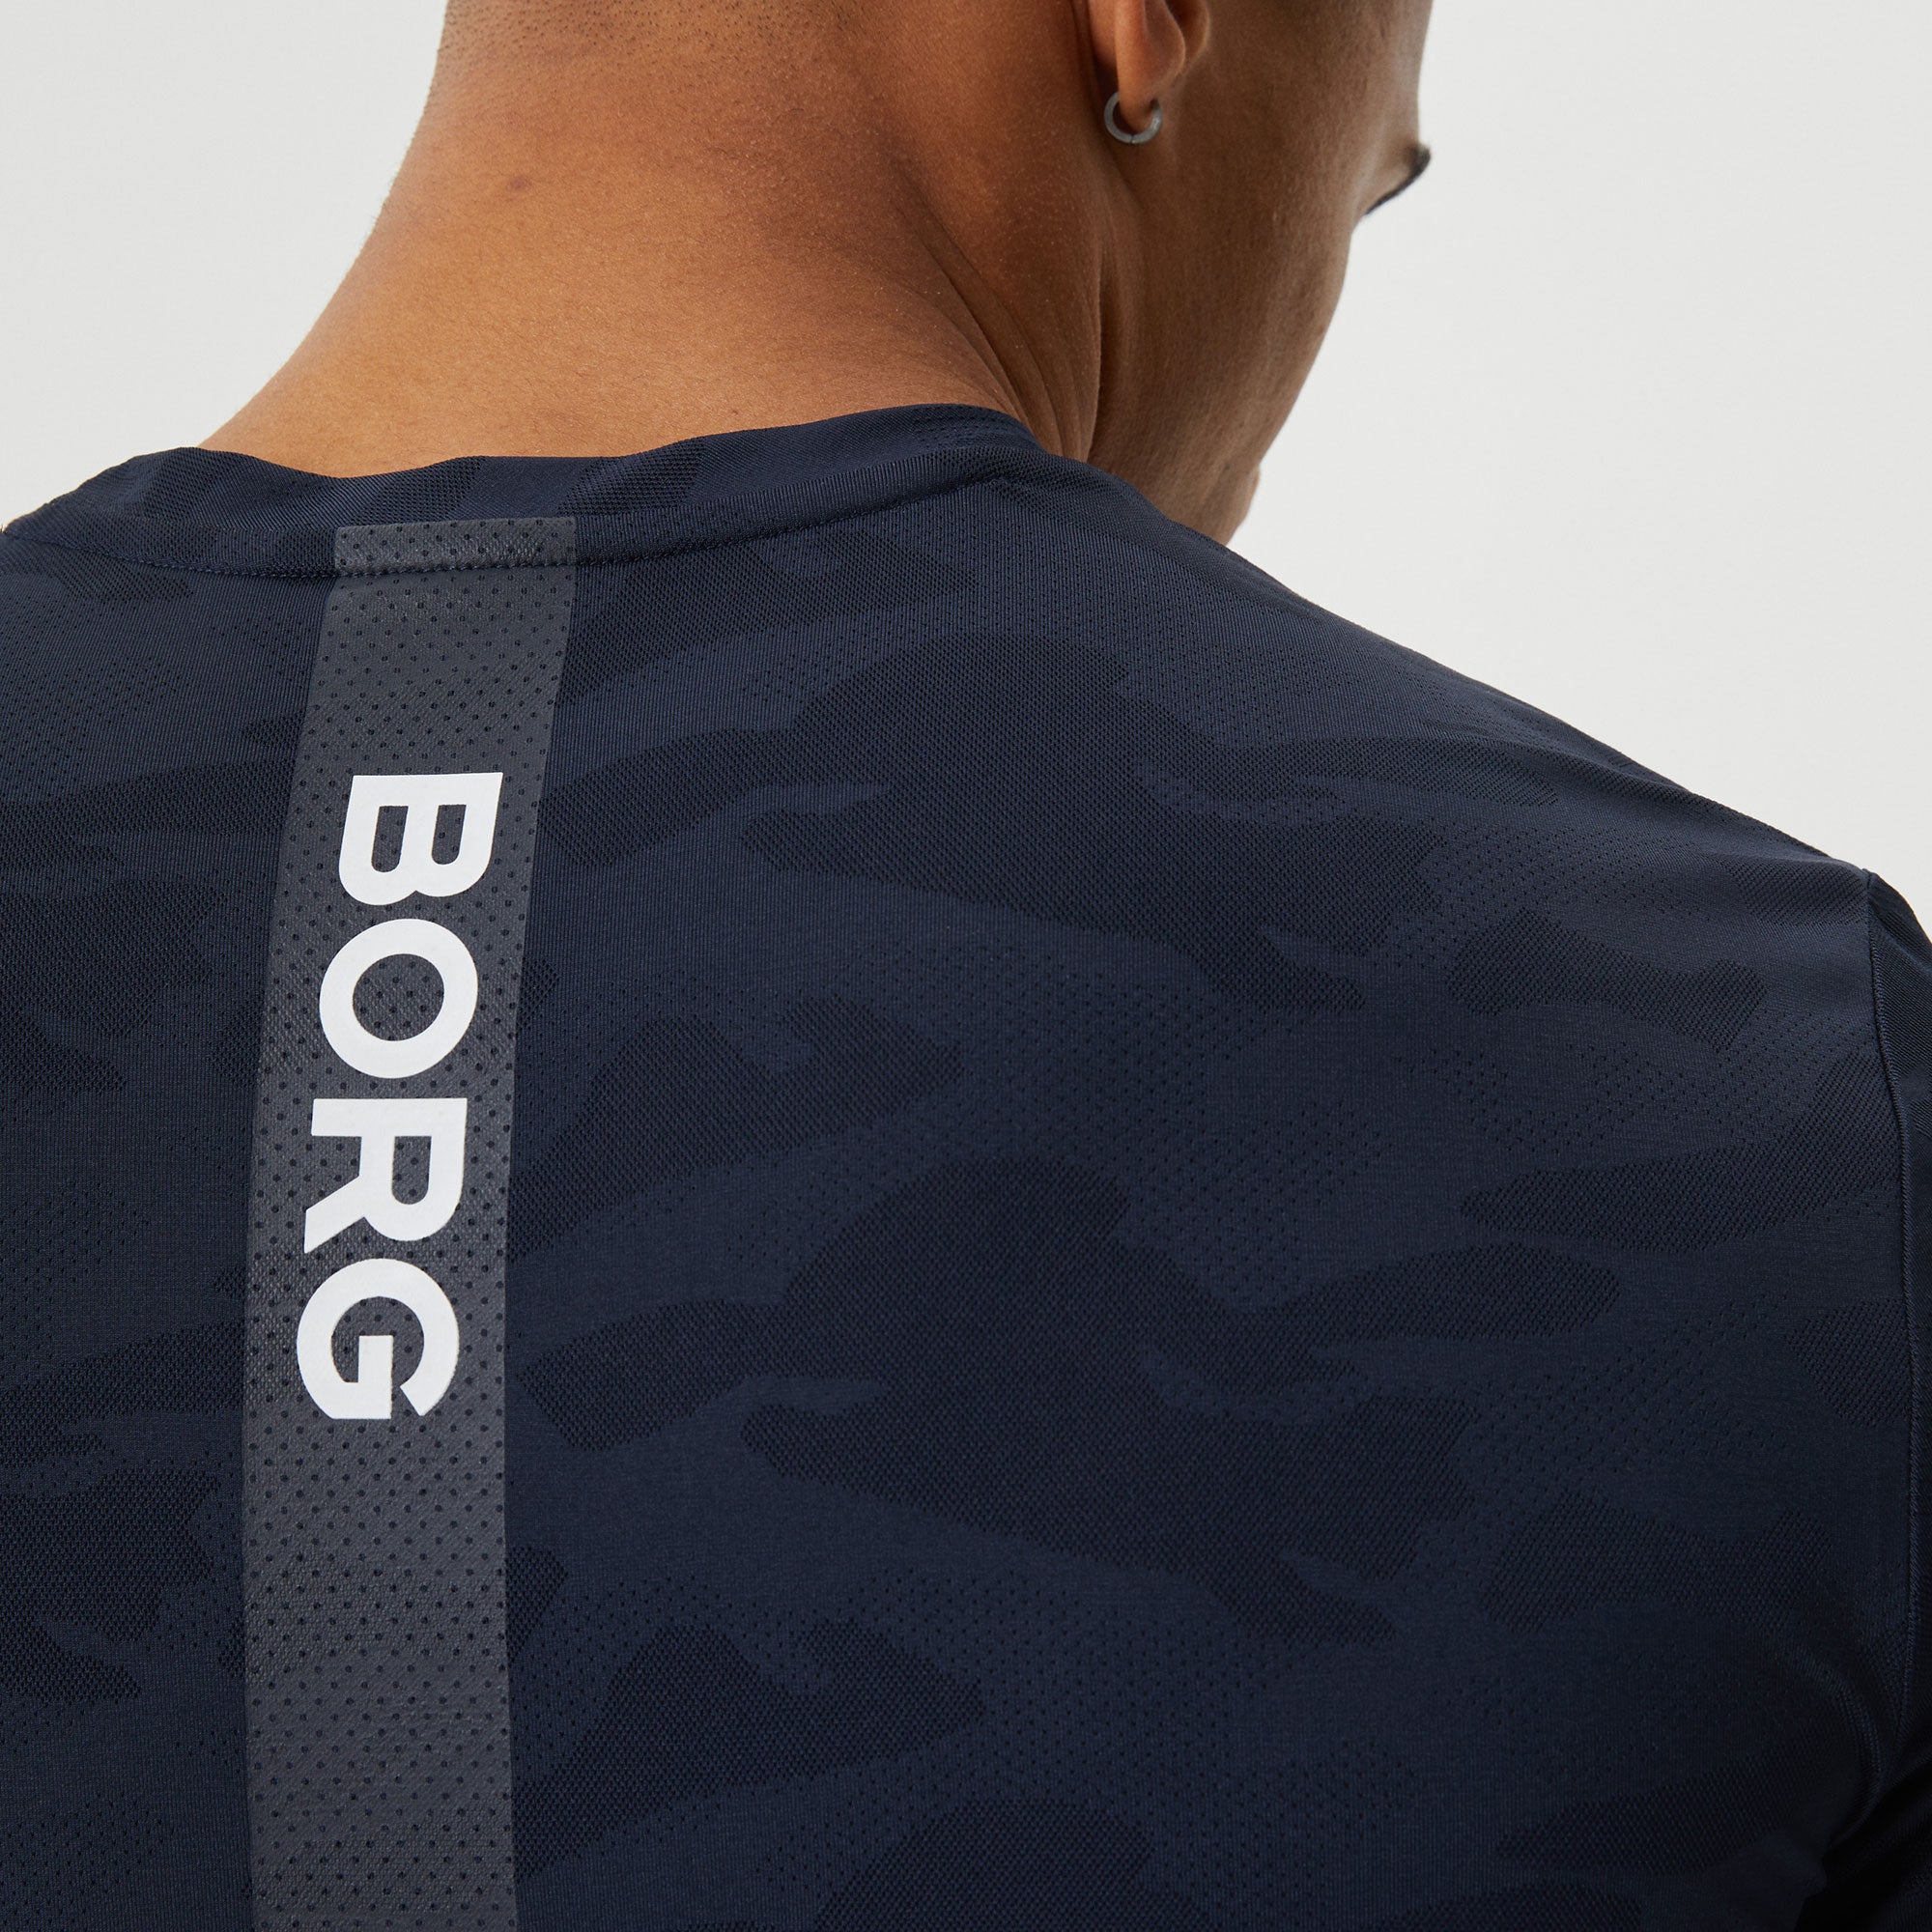 Björn Borg Performance Men's Shirt - Dark Blue (4)